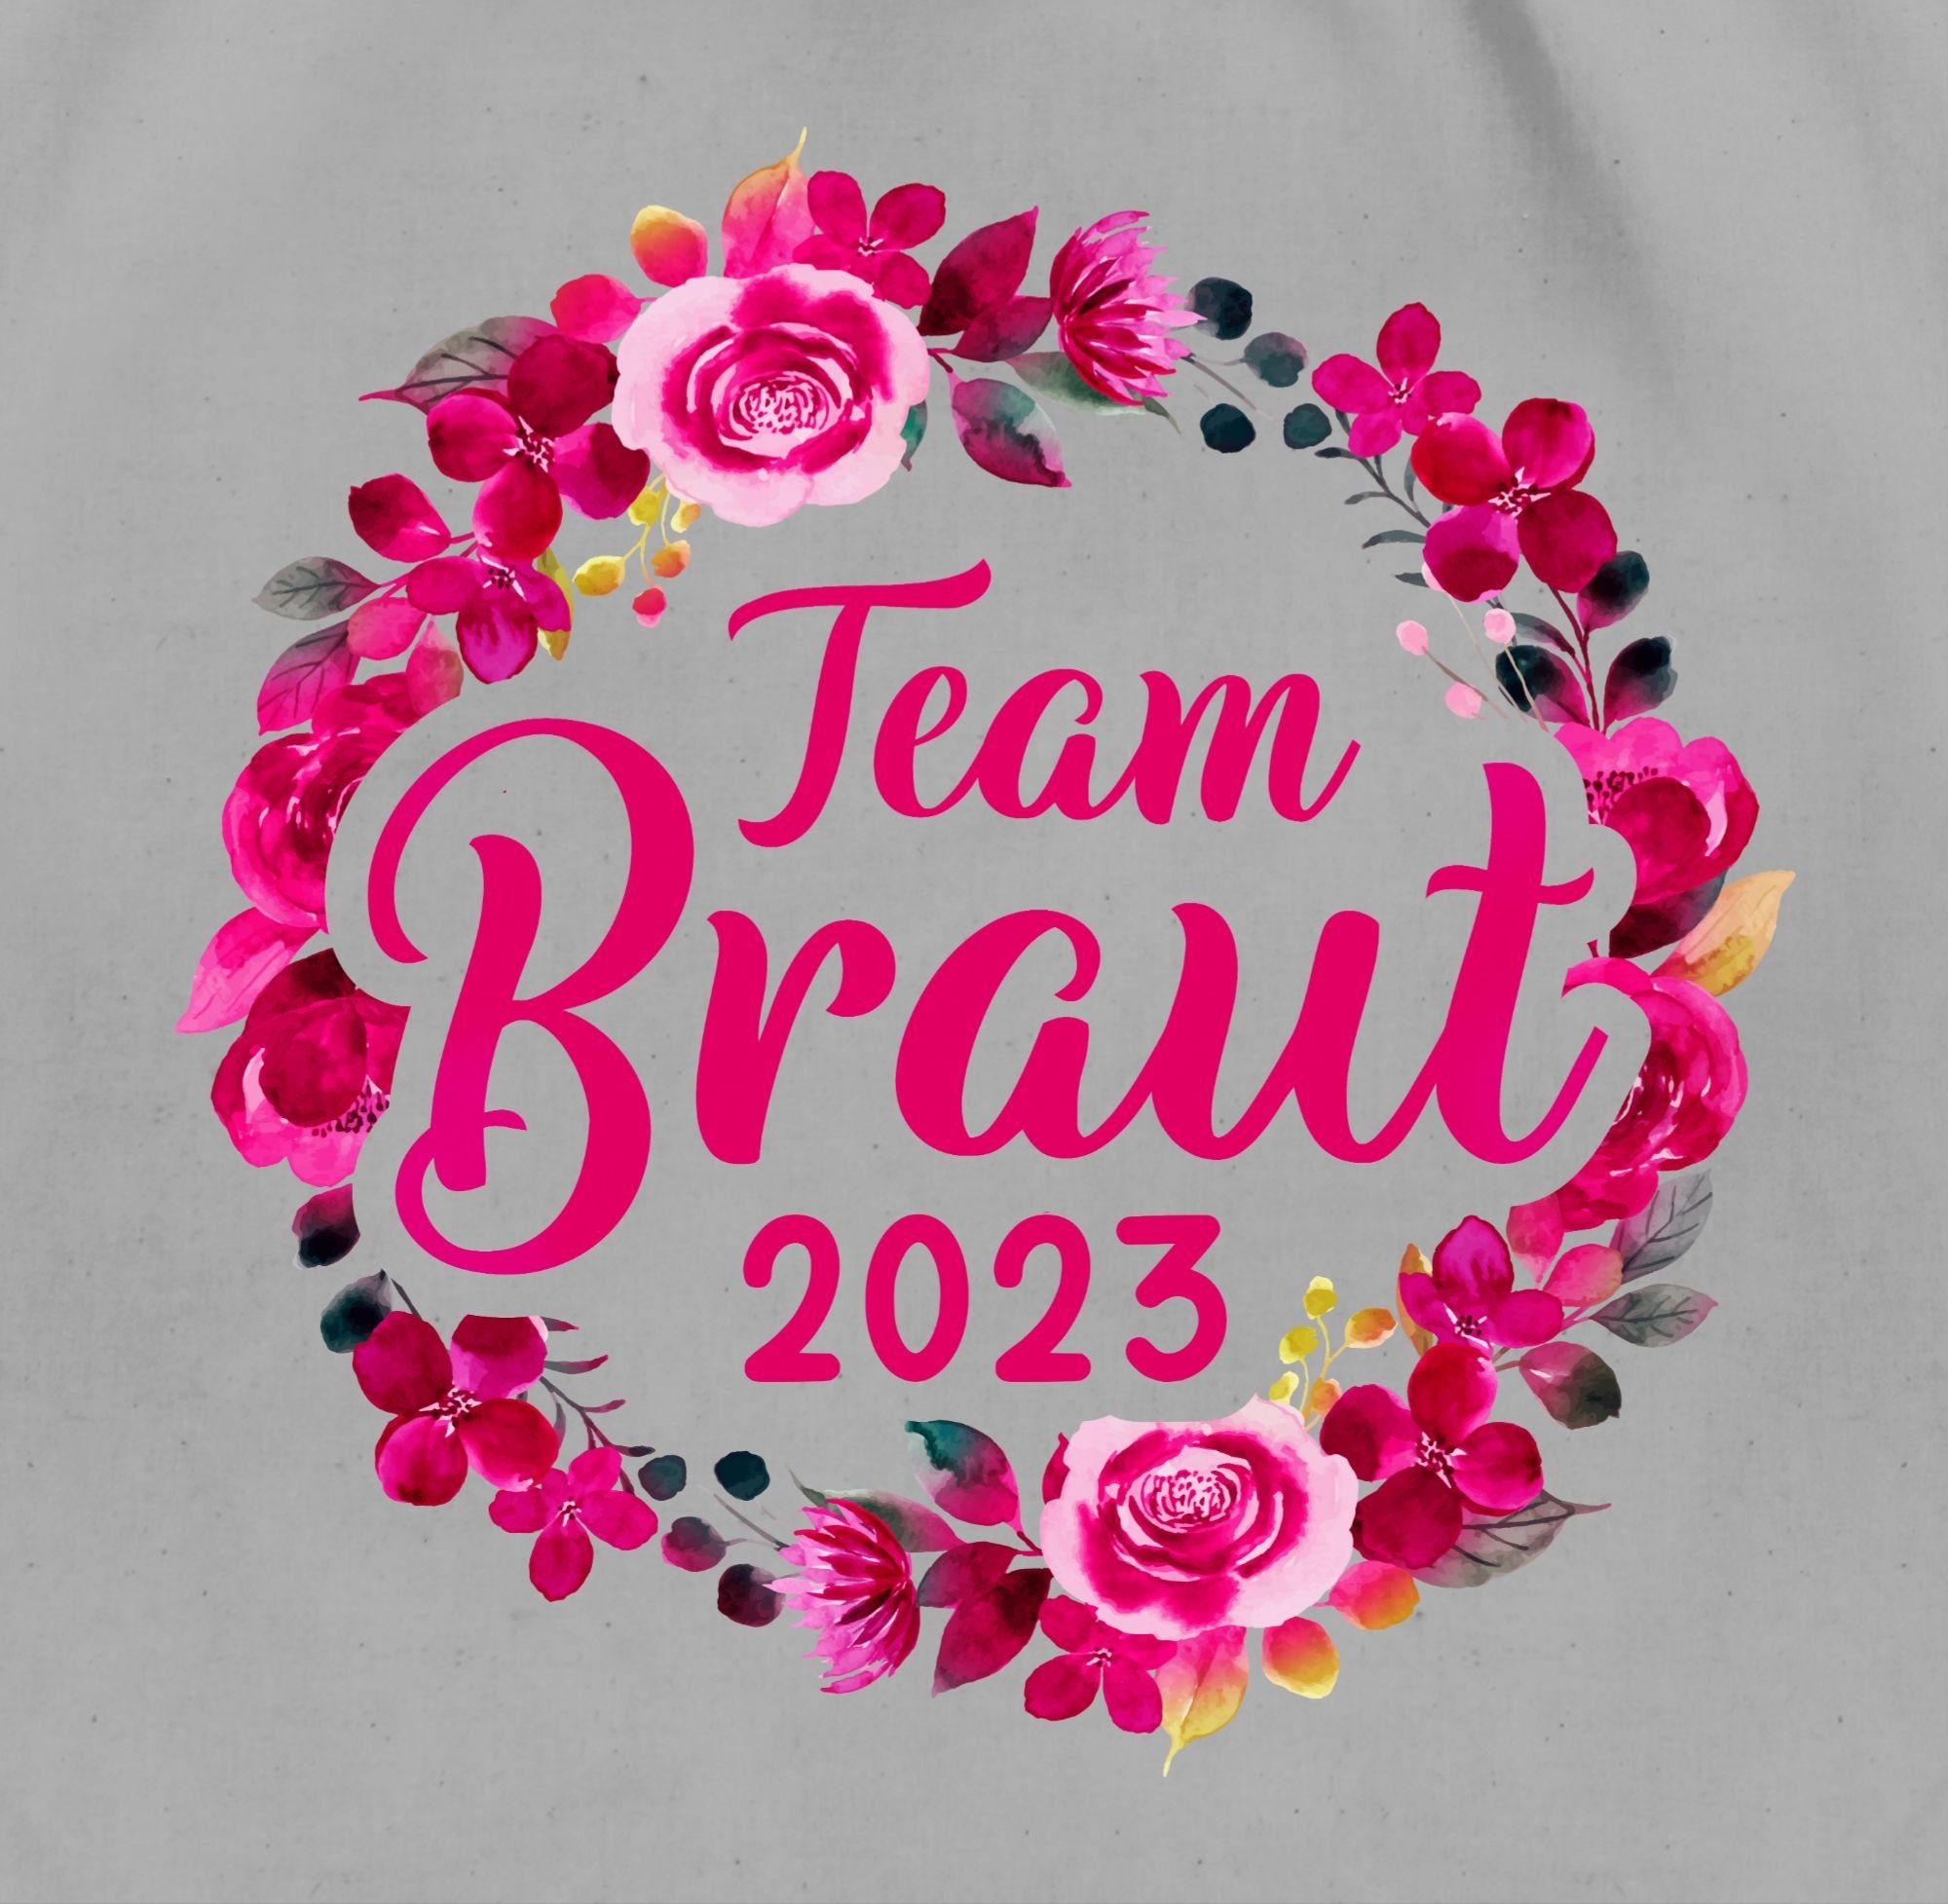 2023 Shirtracer Braut JGA Crew, Hellgrau Frauen Junggesellenabschied 02 Braut Turnbeutel Team